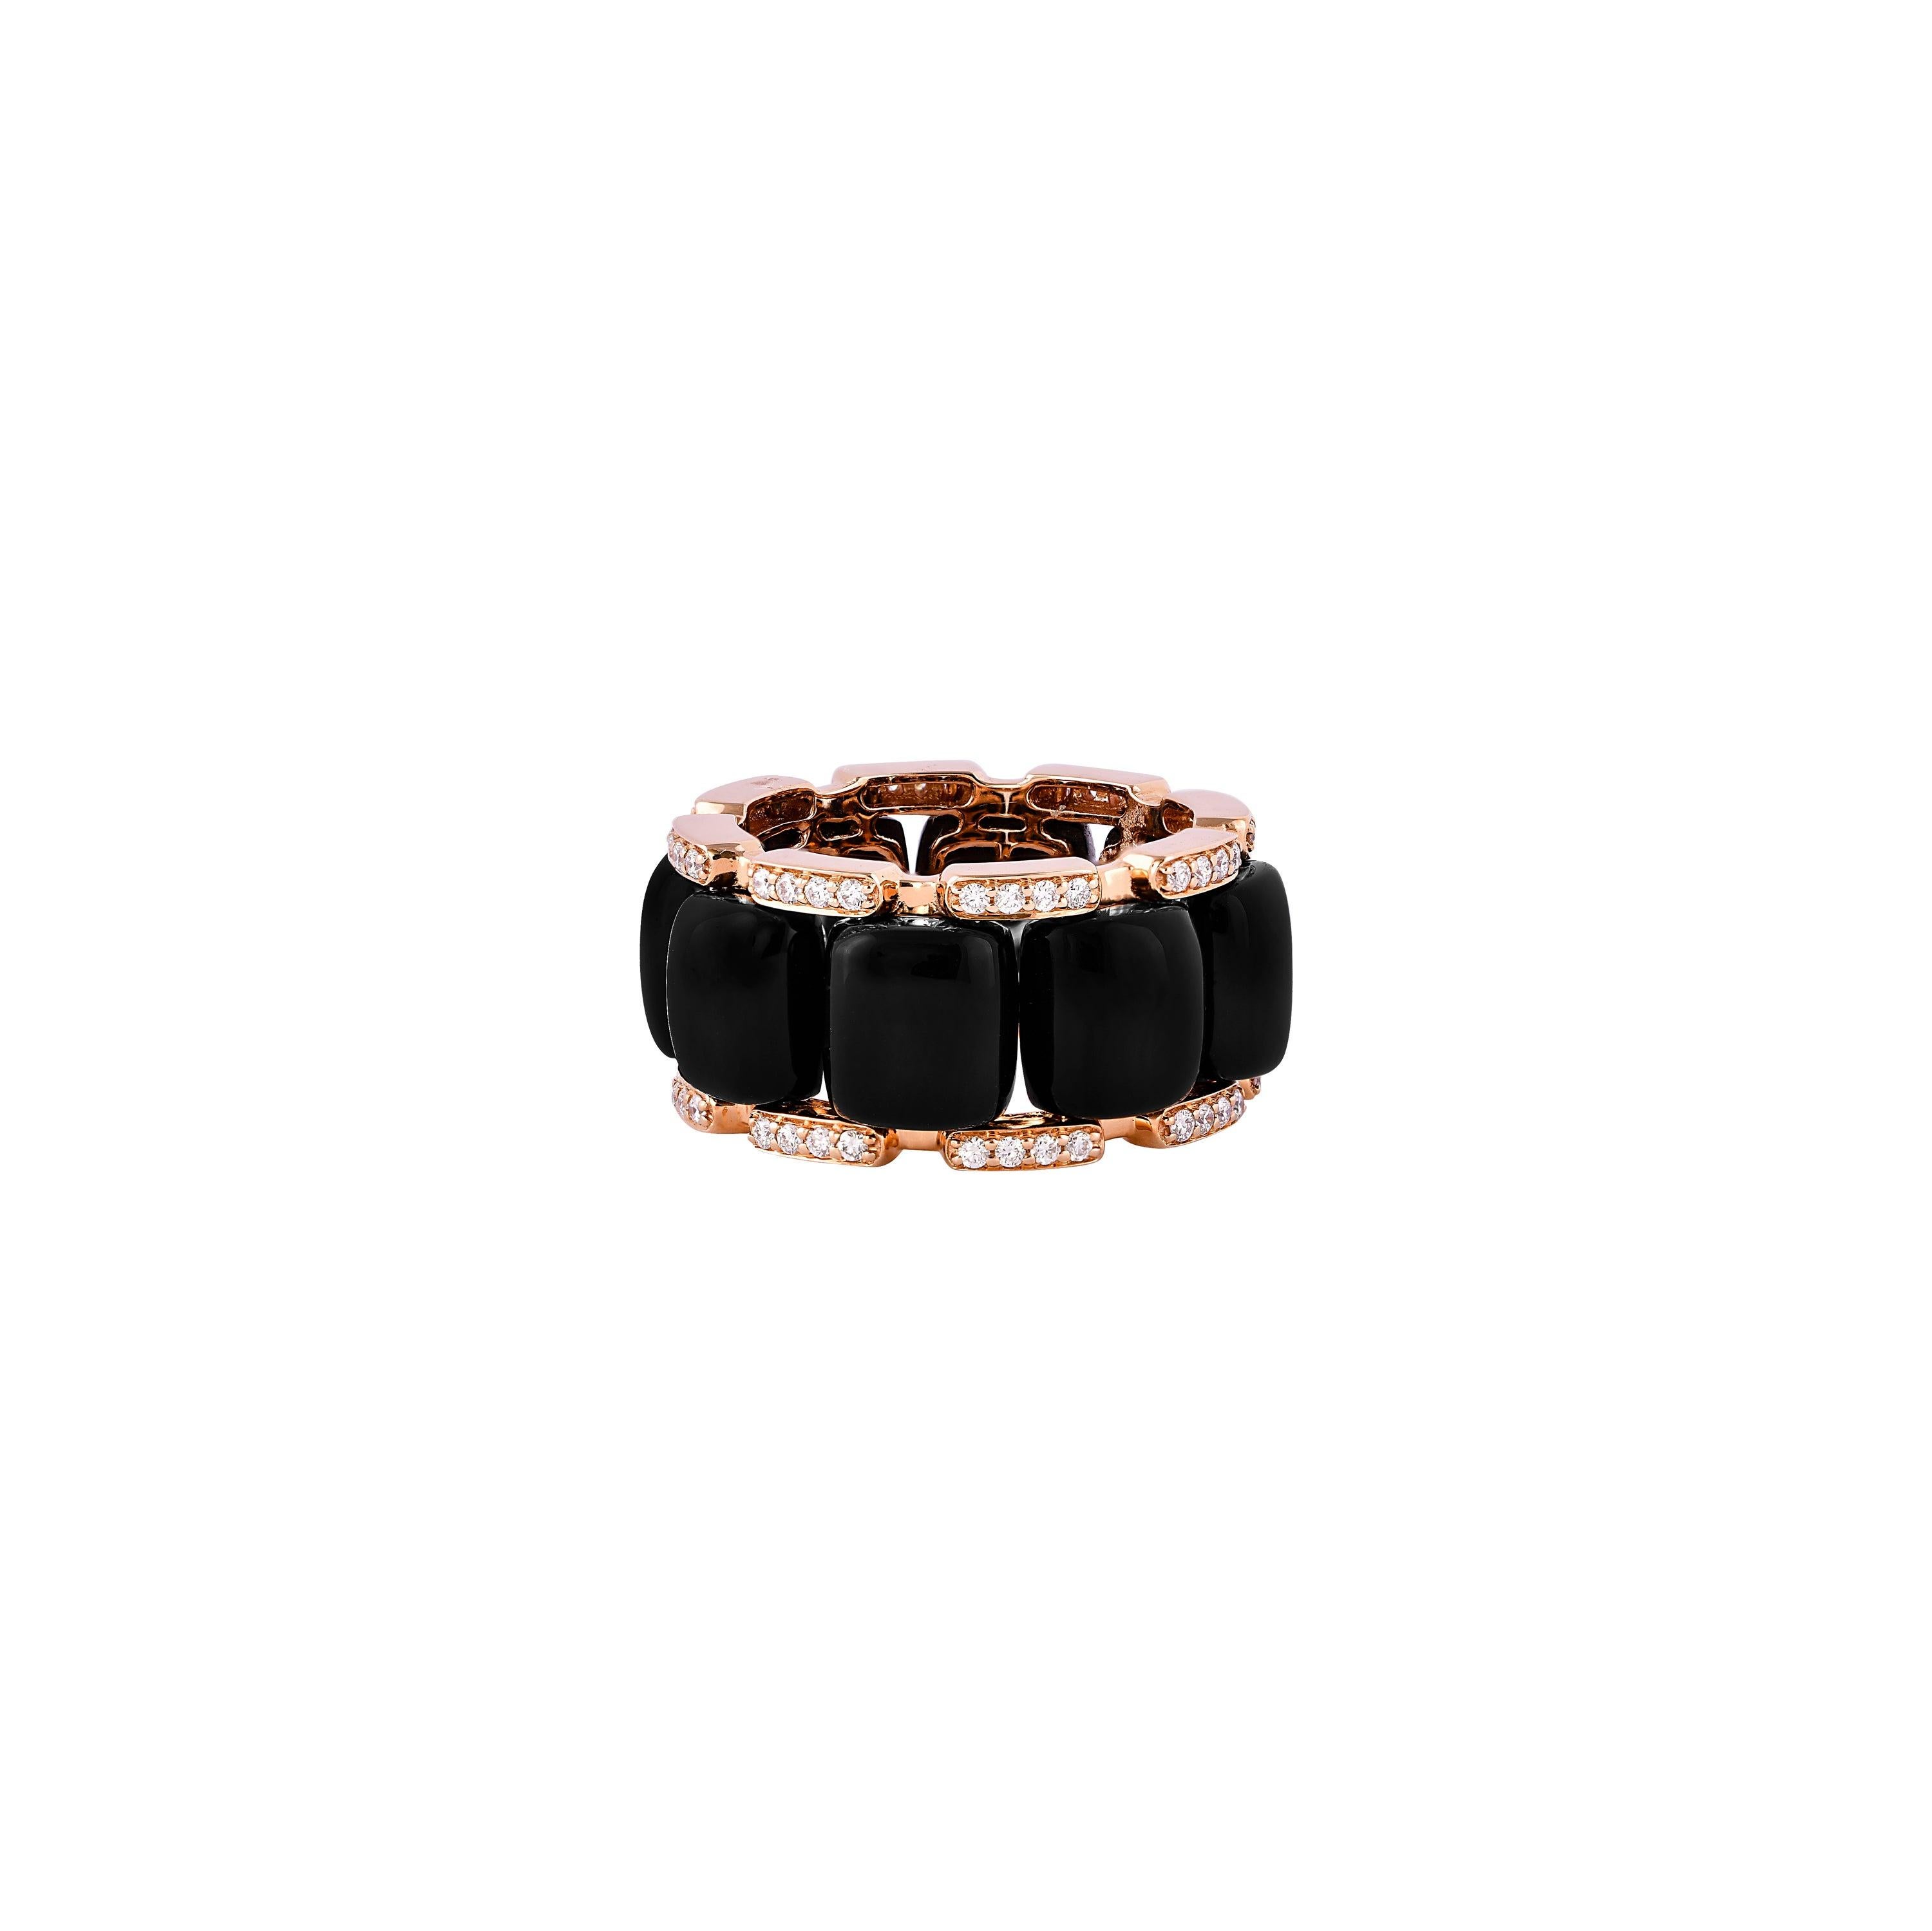 For Sale:  15.17 Carat Black Onyx and White Diamond Ring in 18 Karat Rose Gold 4